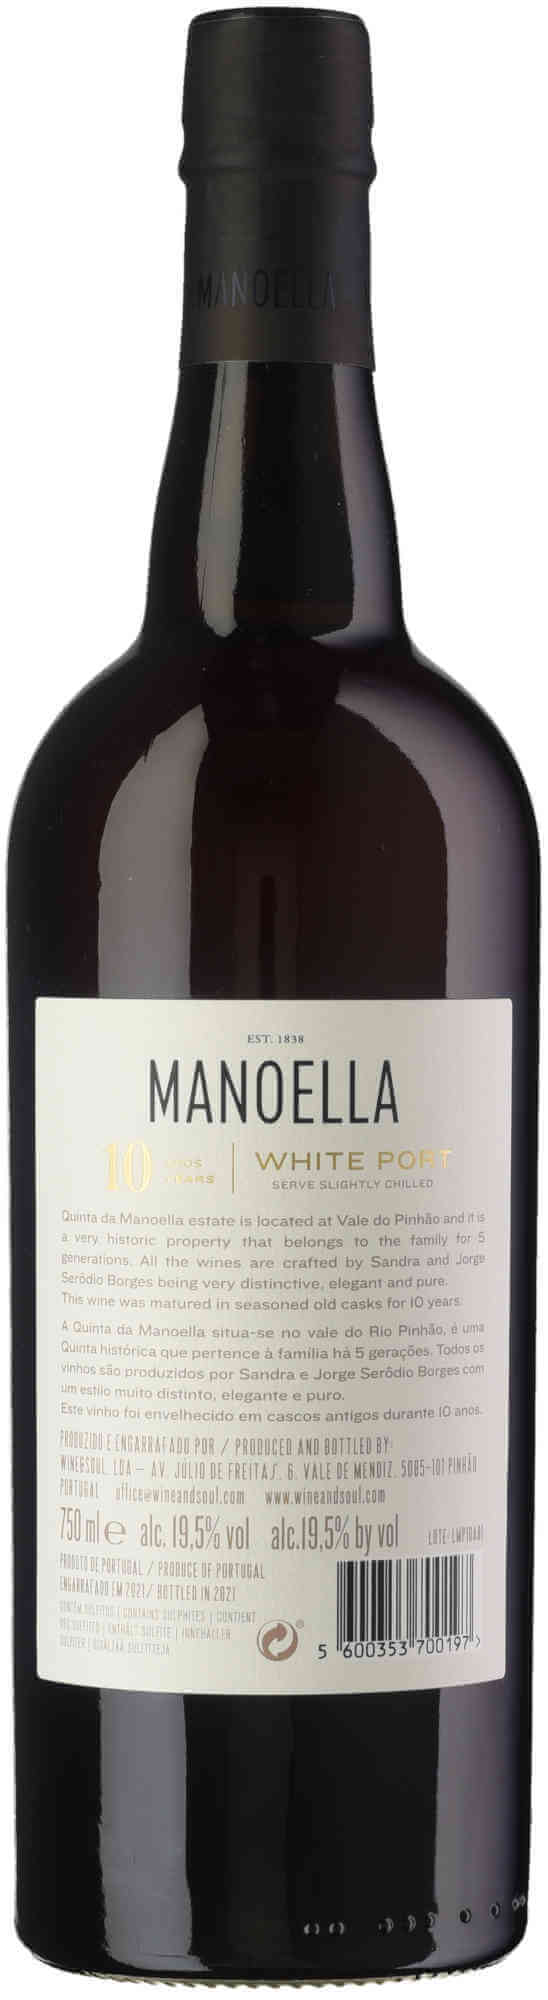 Manoella-10-Yers-Old-White-Port-back